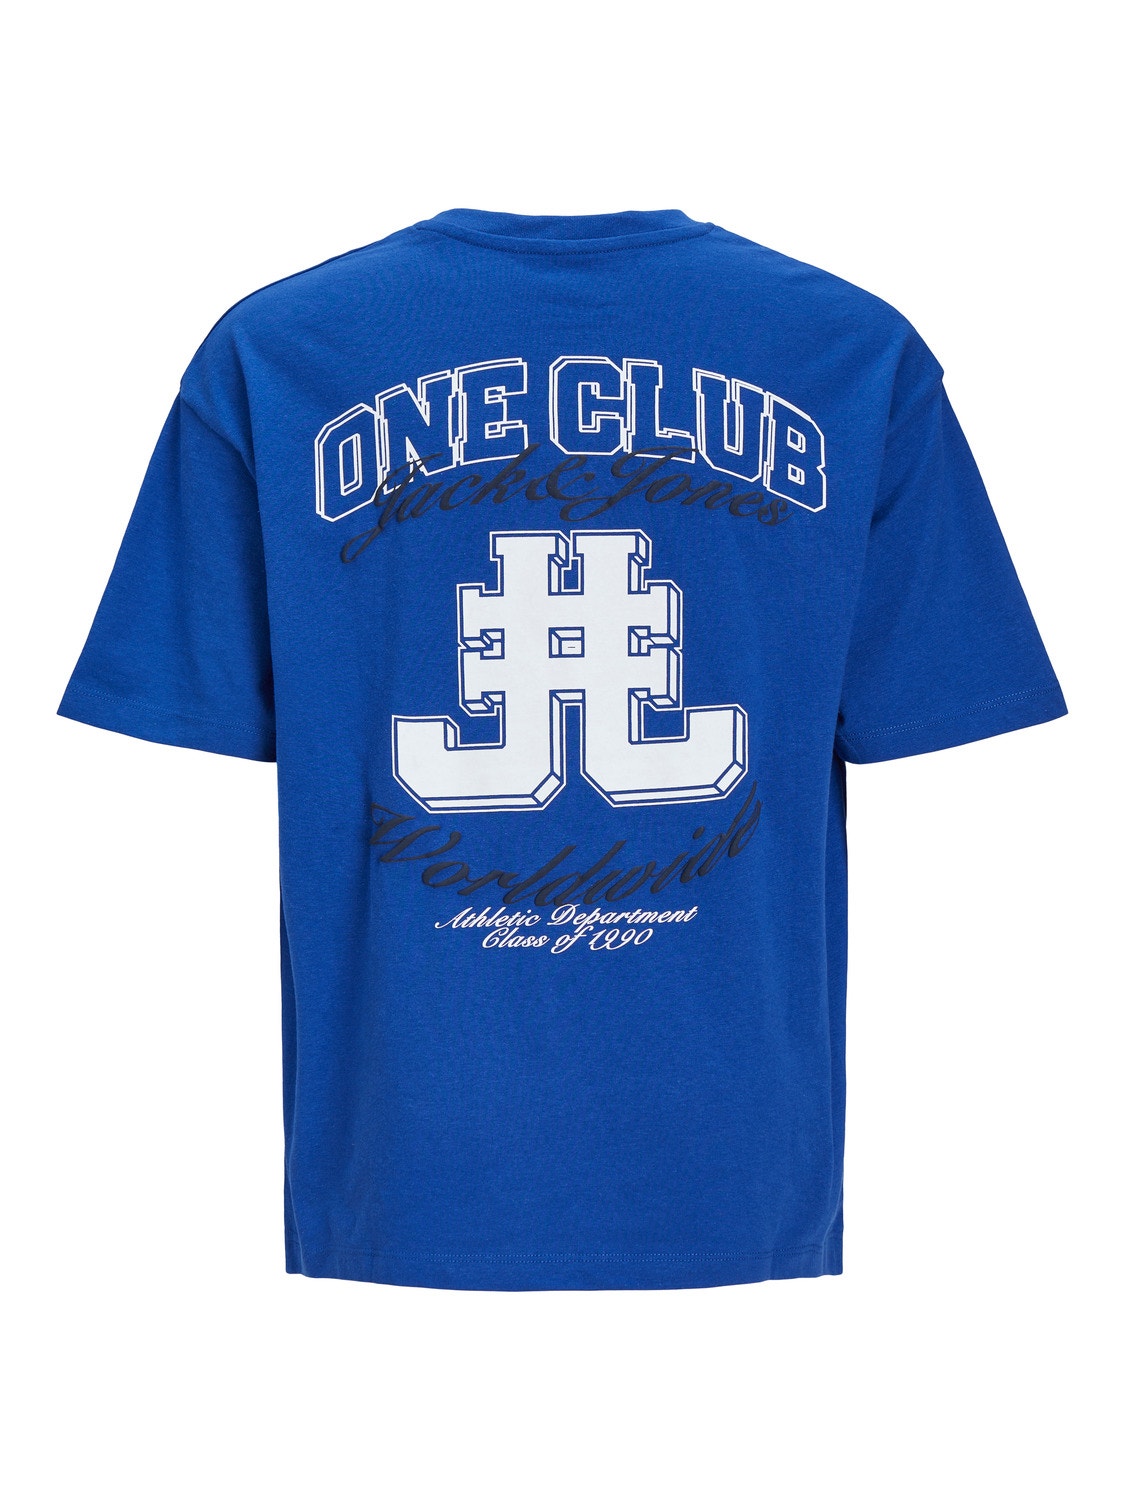 Jack & Jones Camiseta Estampado Bebés -Mazarine Blue - 12257431